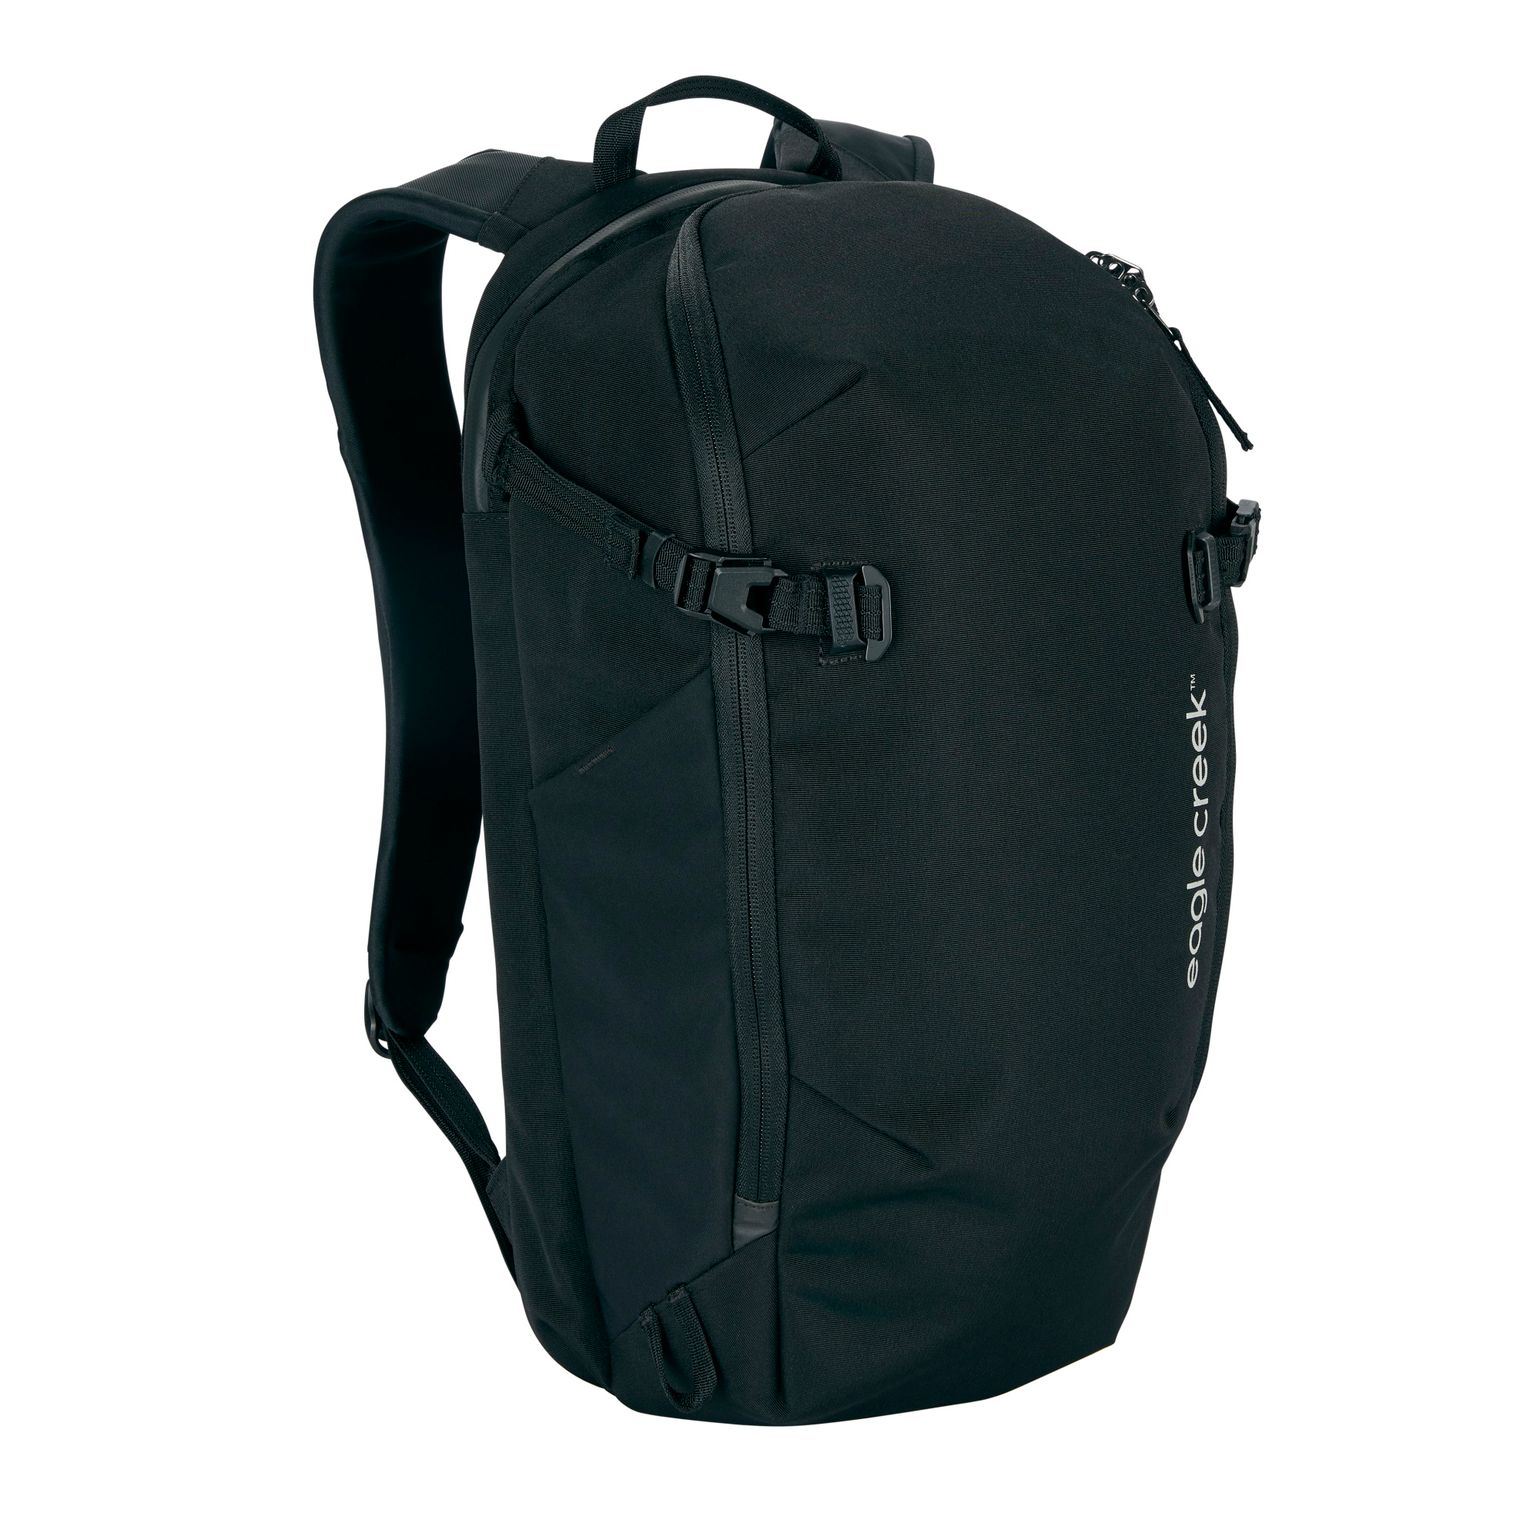 Explore Backpack 26L Black